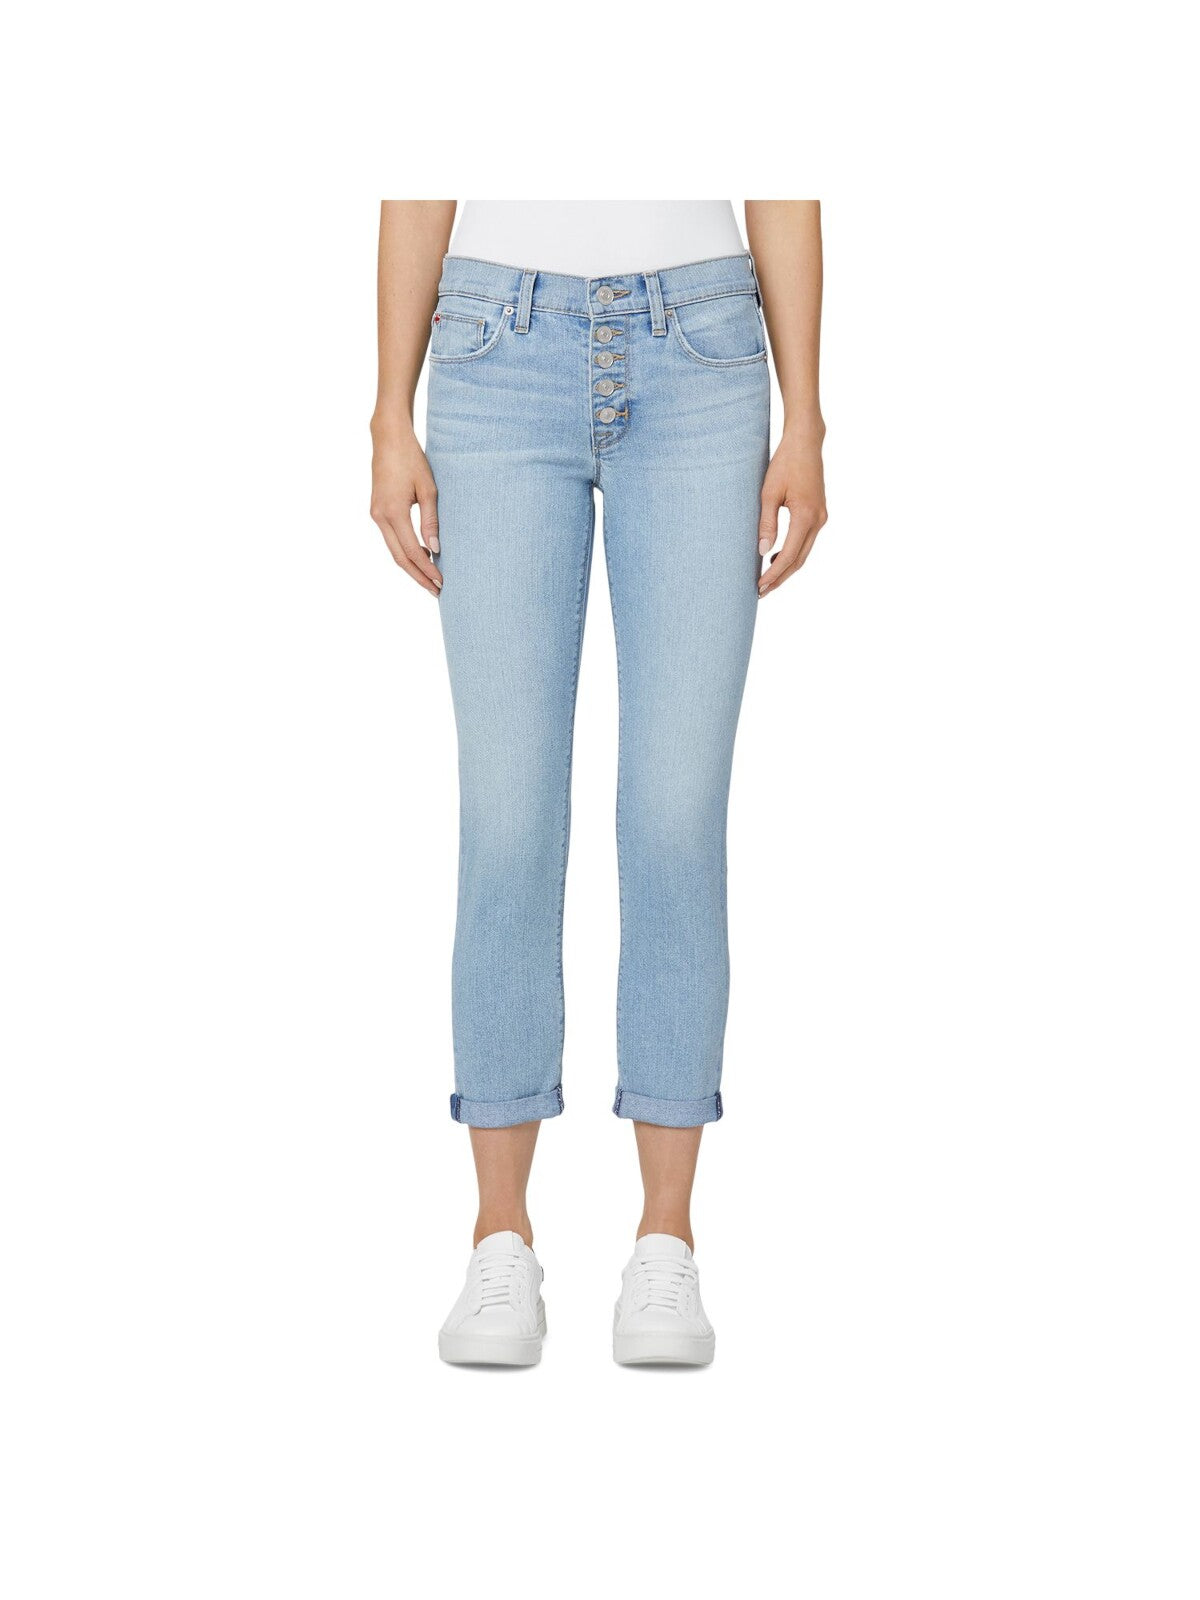 HUDSON Womens Light Blue Denim Pocketed Button Fly Mid-rise Slim Cuffed Jeans 24 Waist